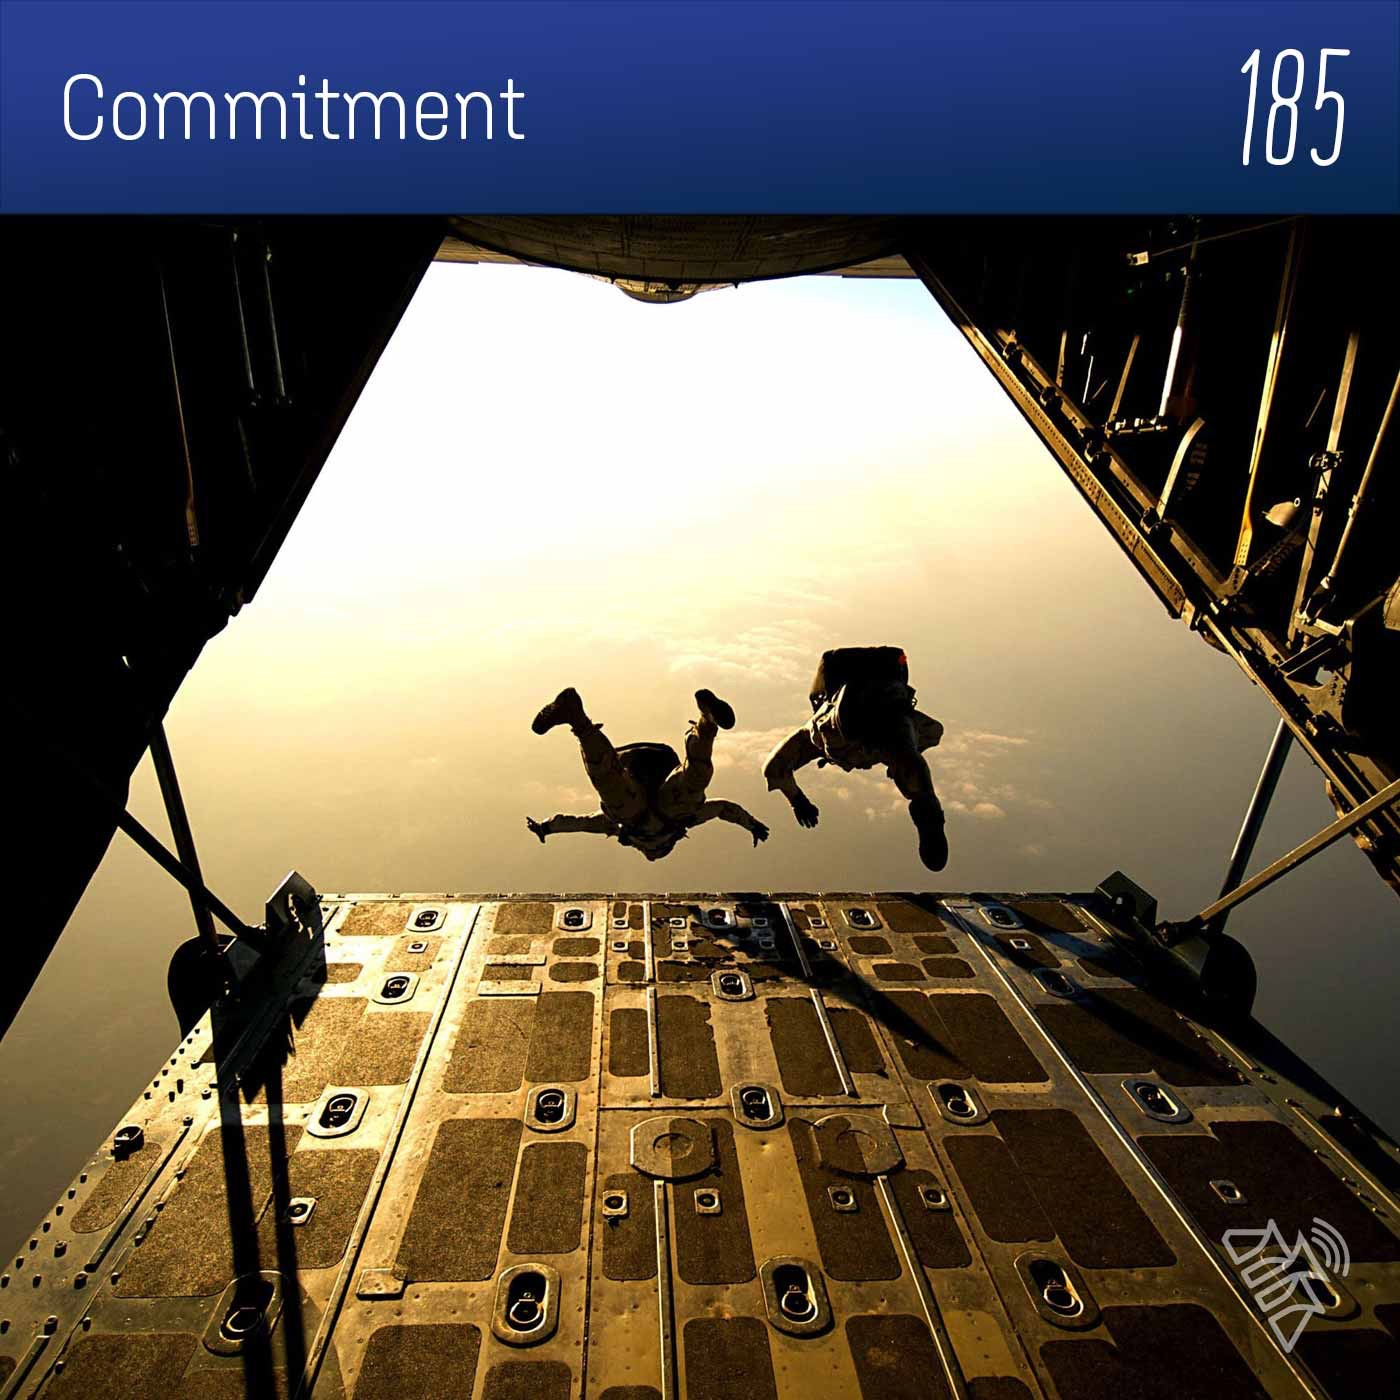 Commitment - Pr Jock Duncan - 185